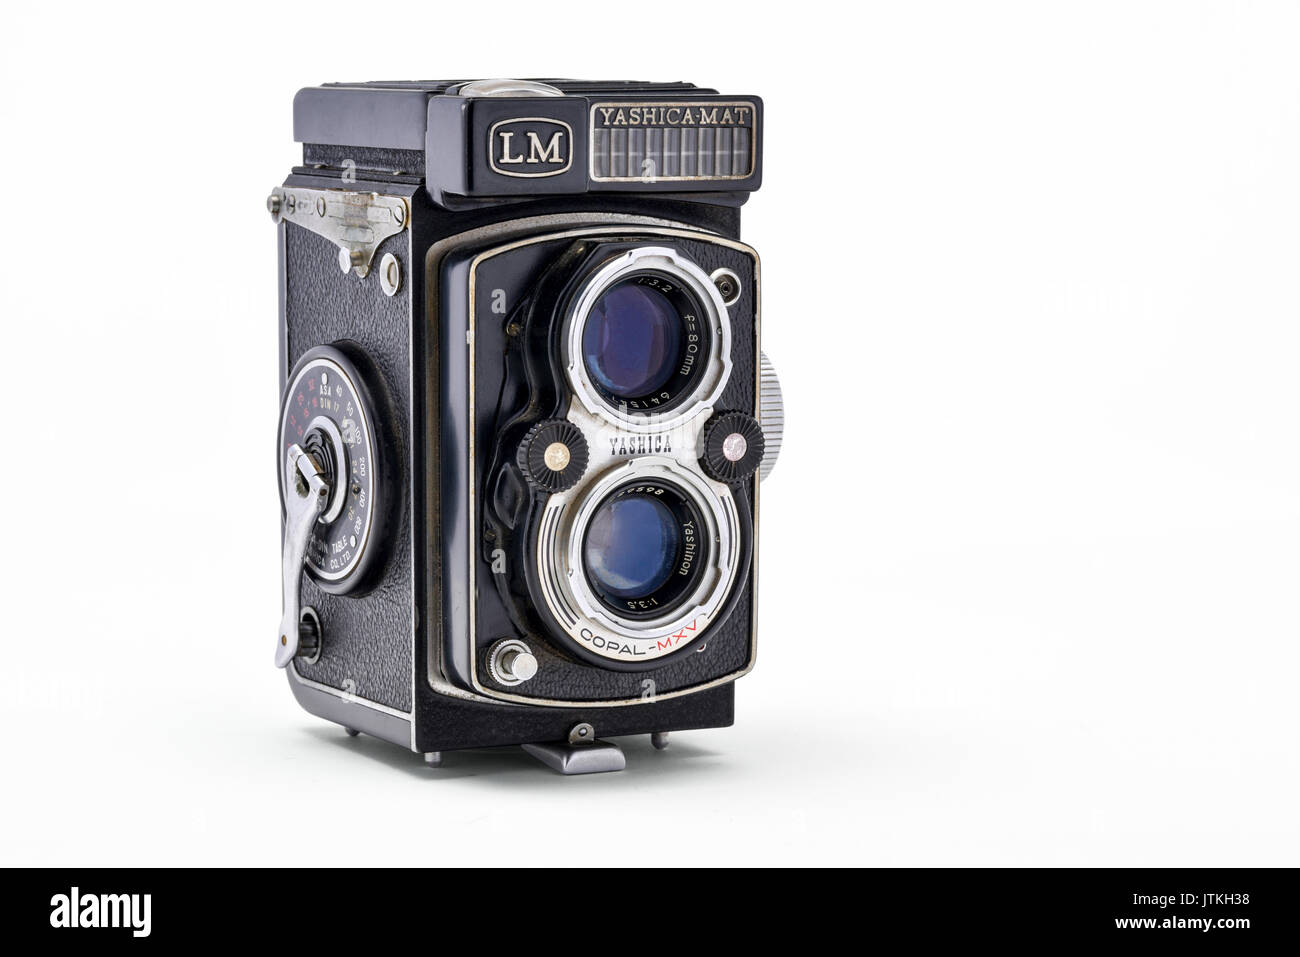 Vintage Yashica-Mat medio formato fotocamera a pellicola. Foto Stock